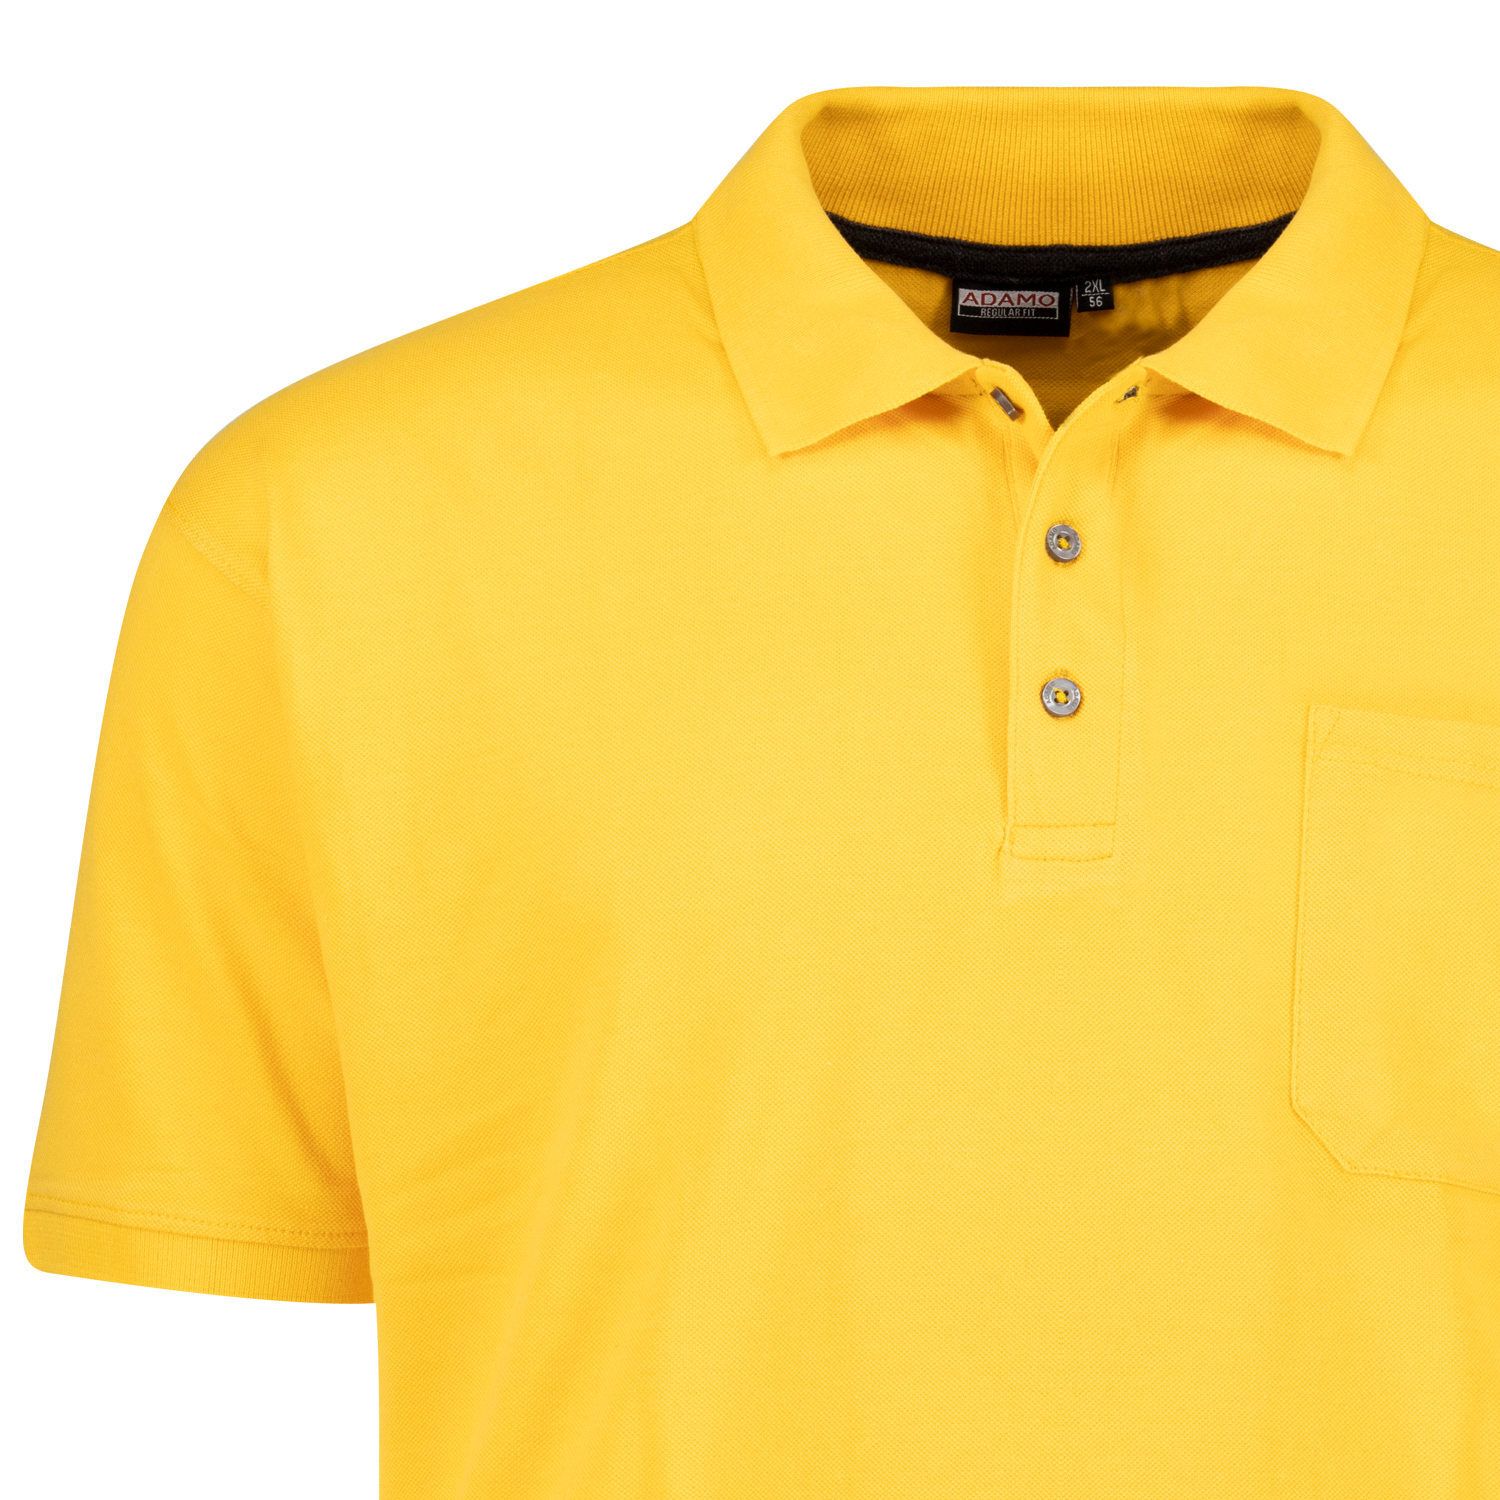 ADAMO Herren Pique Polohemd kurzärmlig Modell KLAAS in gelb bis Übergröße 10XL Regular Fit